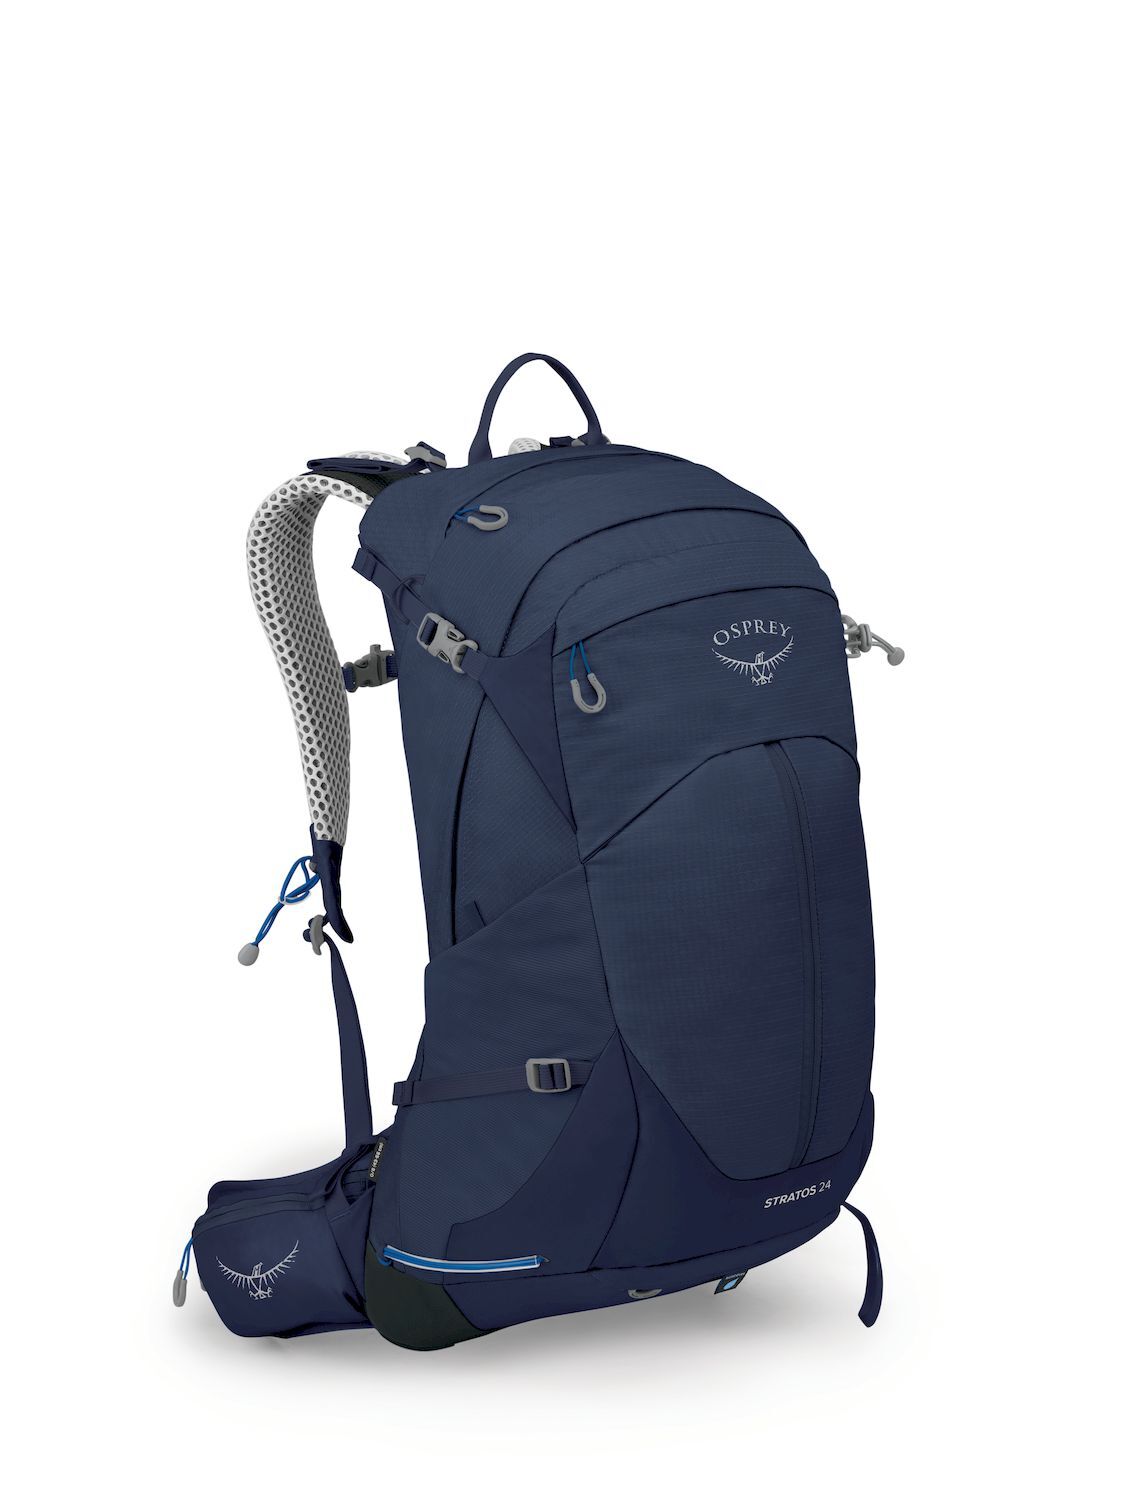 Osprey Stratos Plus 24 - Walking backpack - Men's